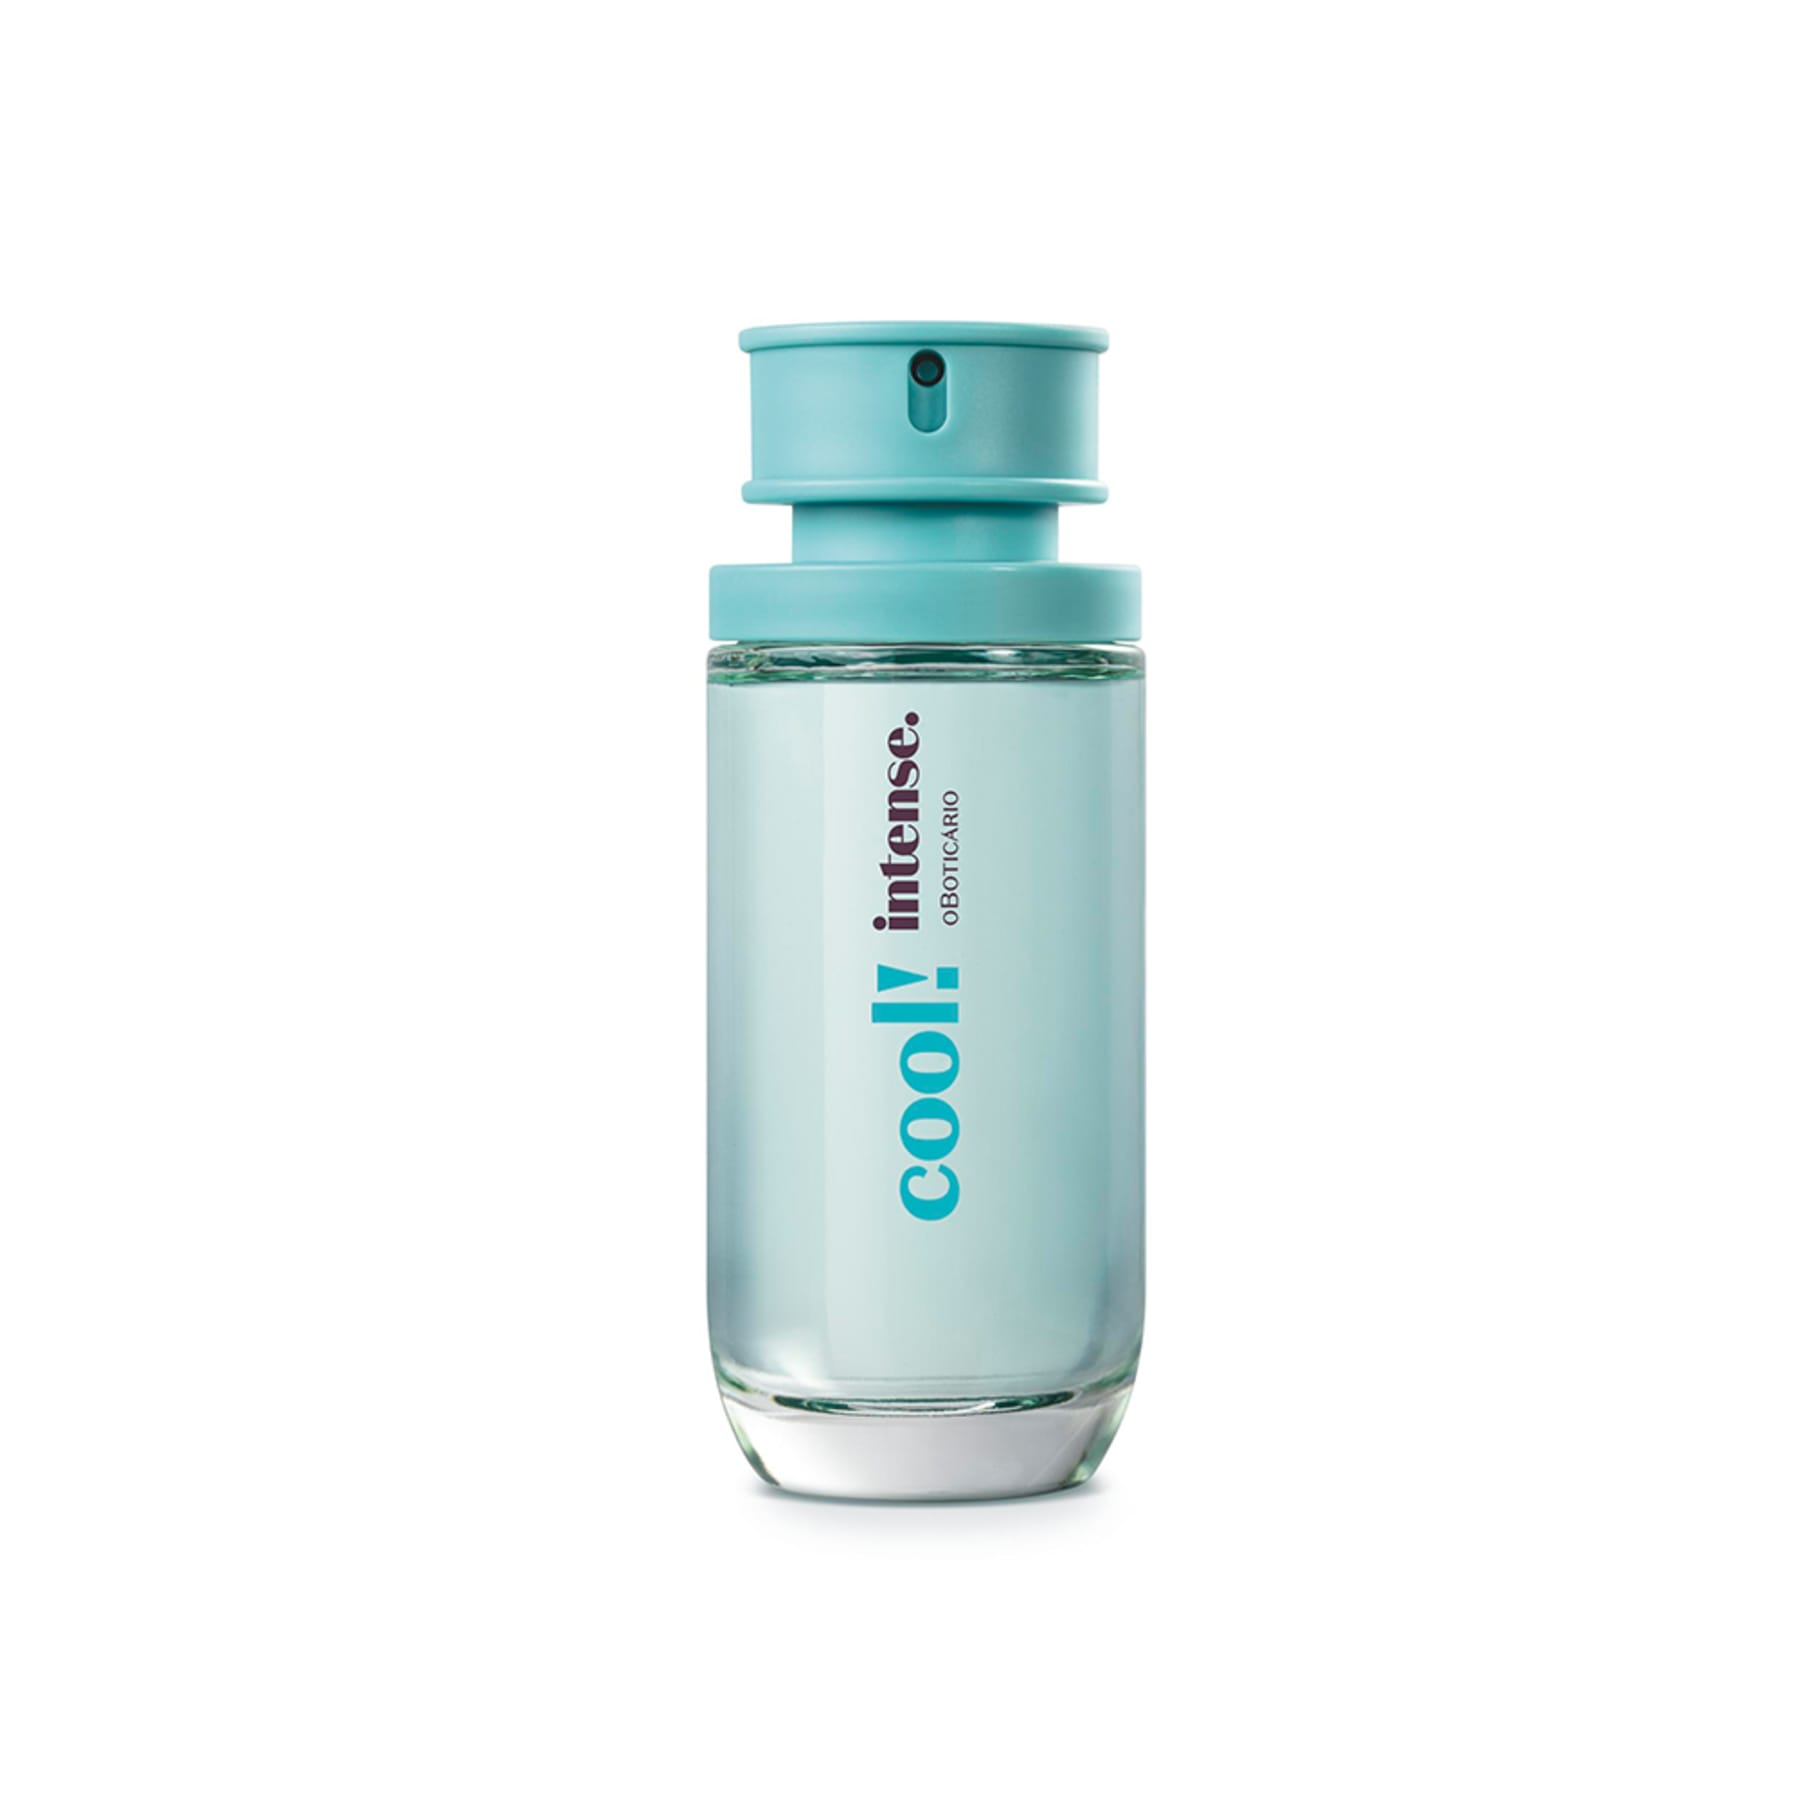 Kit Intense Cool!: Deodorant Cologne 50ml + Body Lotion 200ml - o Boticario